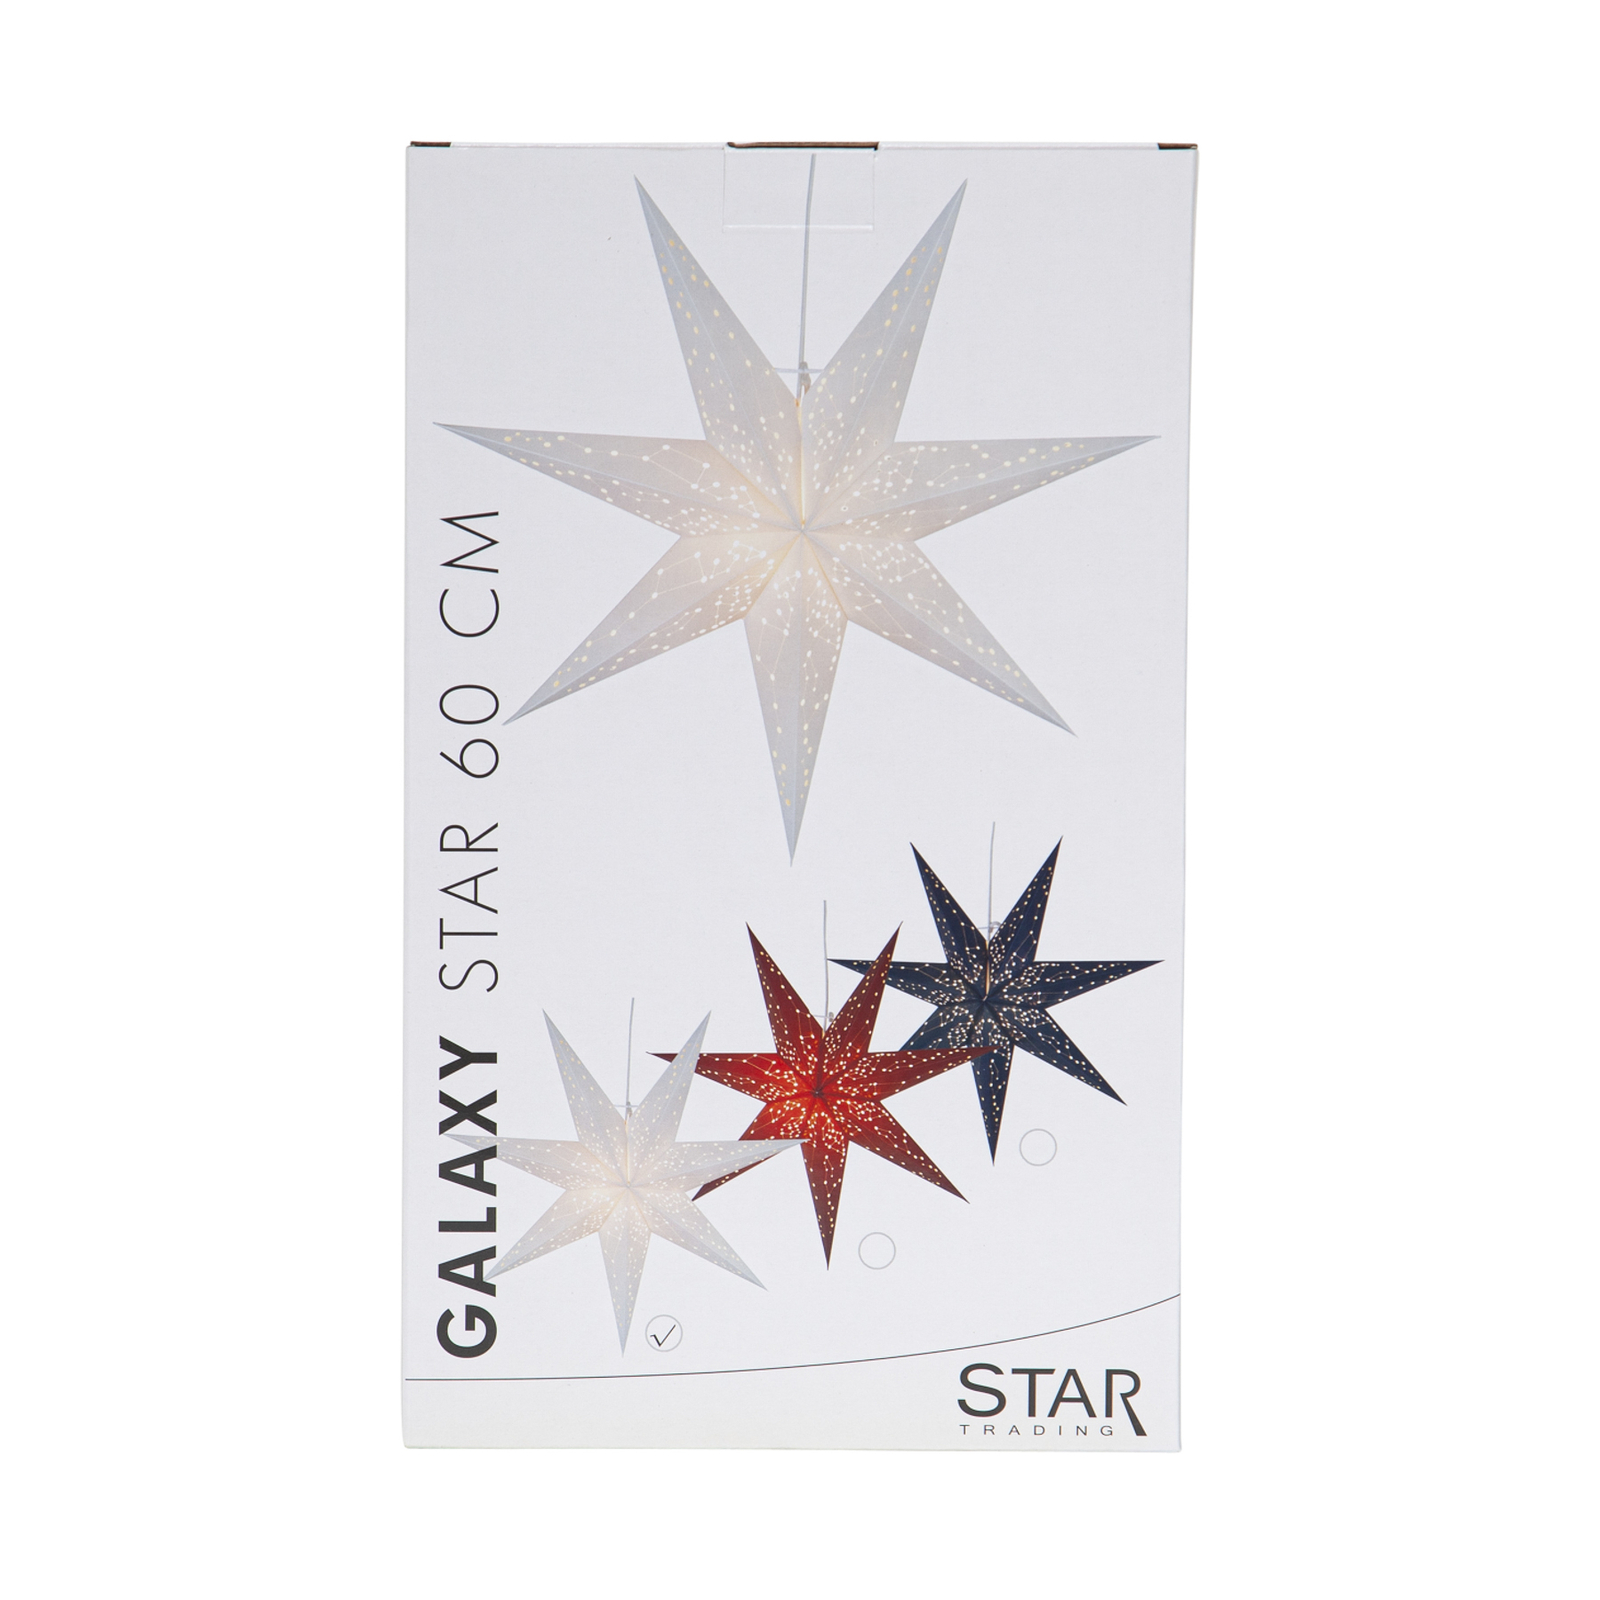 Decoratie ster Galaxy van papier, wit Ø 60 cm